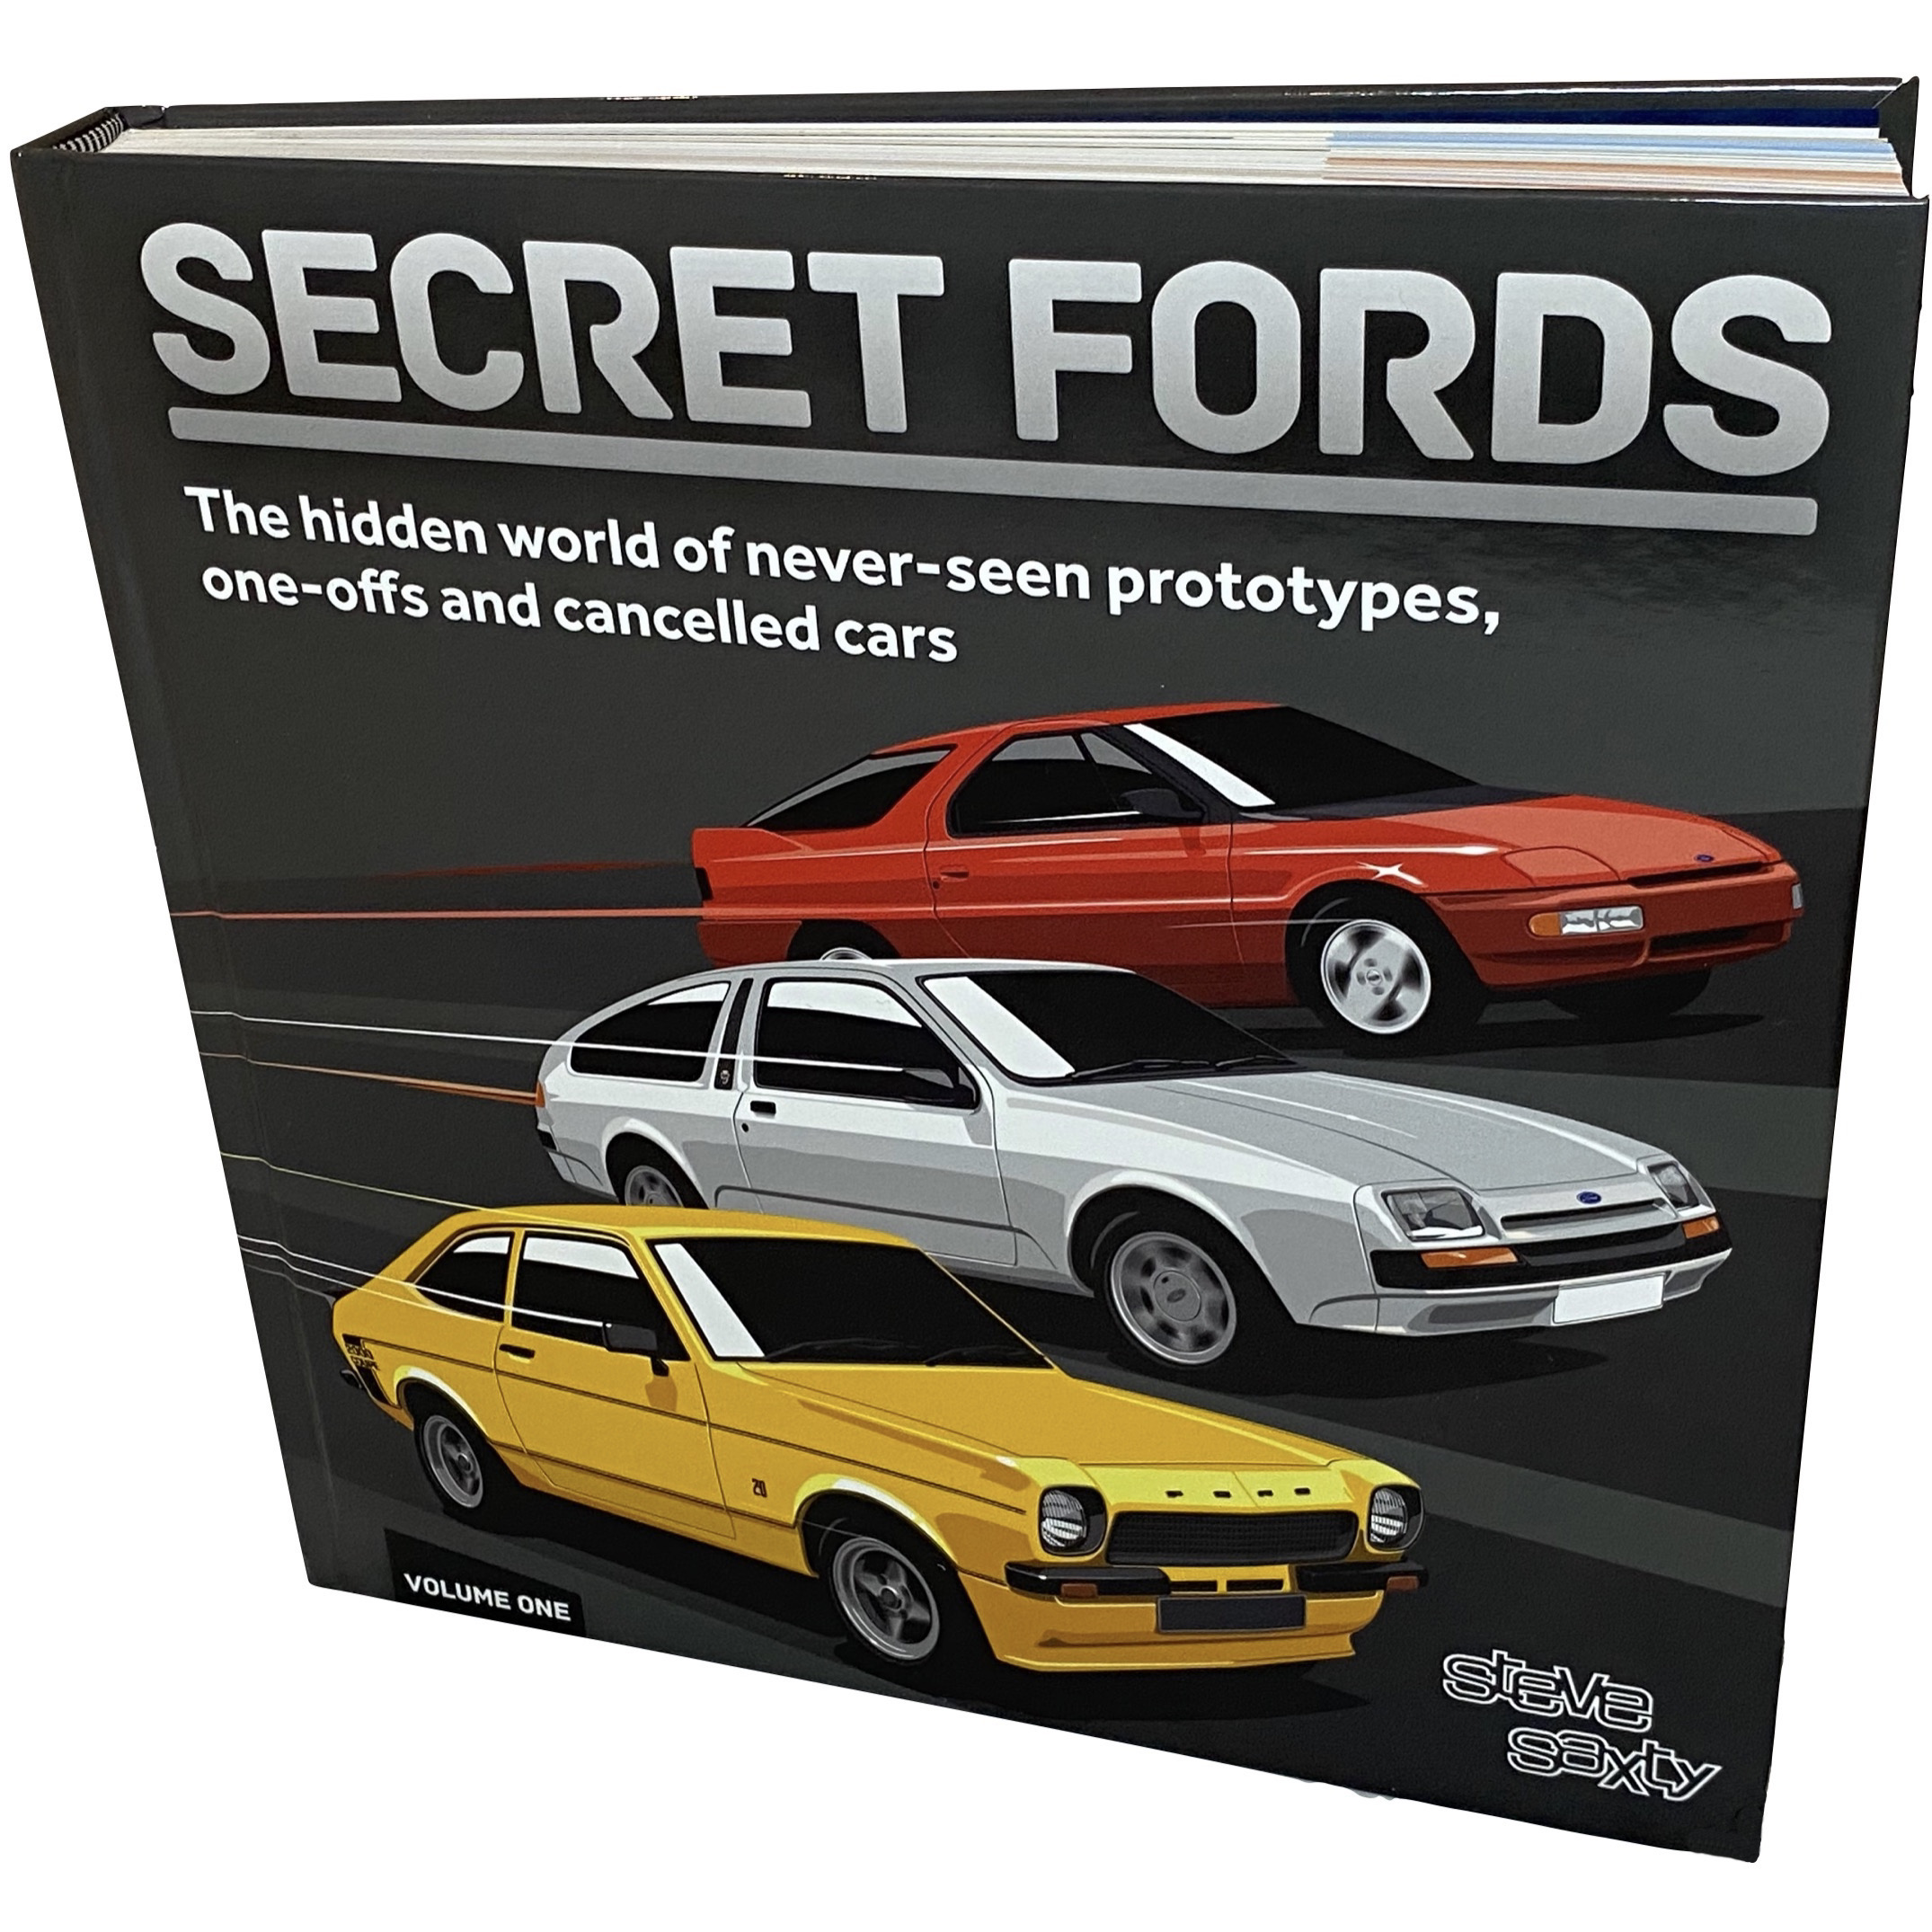 Steve Saxty's Secret Ford volume one